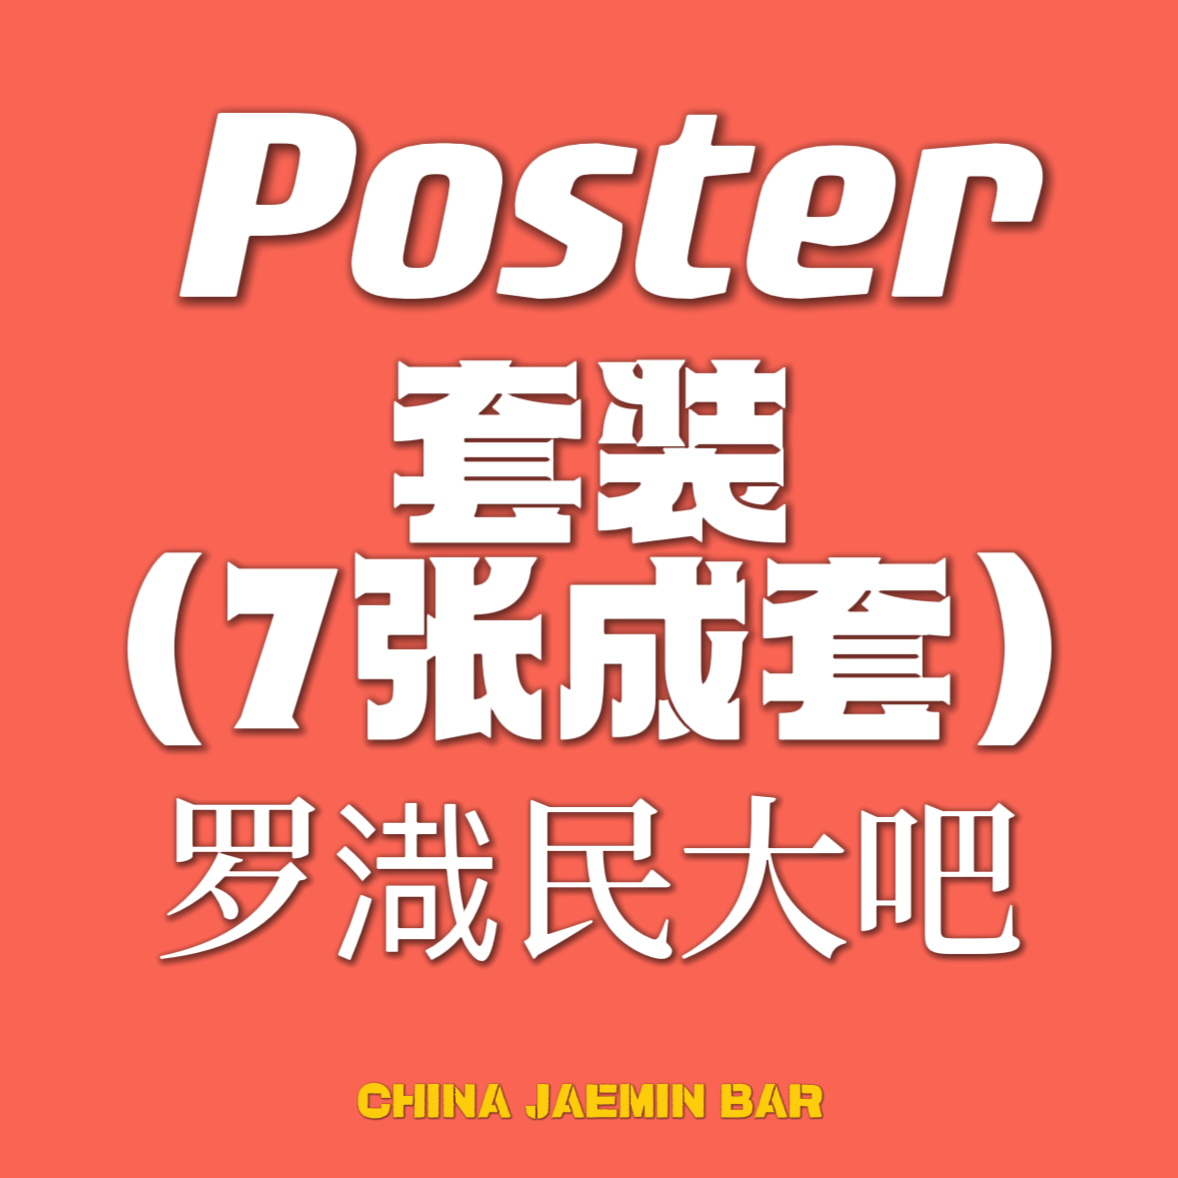 [全款 裸专] [7CD 套装] NCT DREAM - 正规3辑 [ISTJ] (Poster Ver.)_罗渽民吧